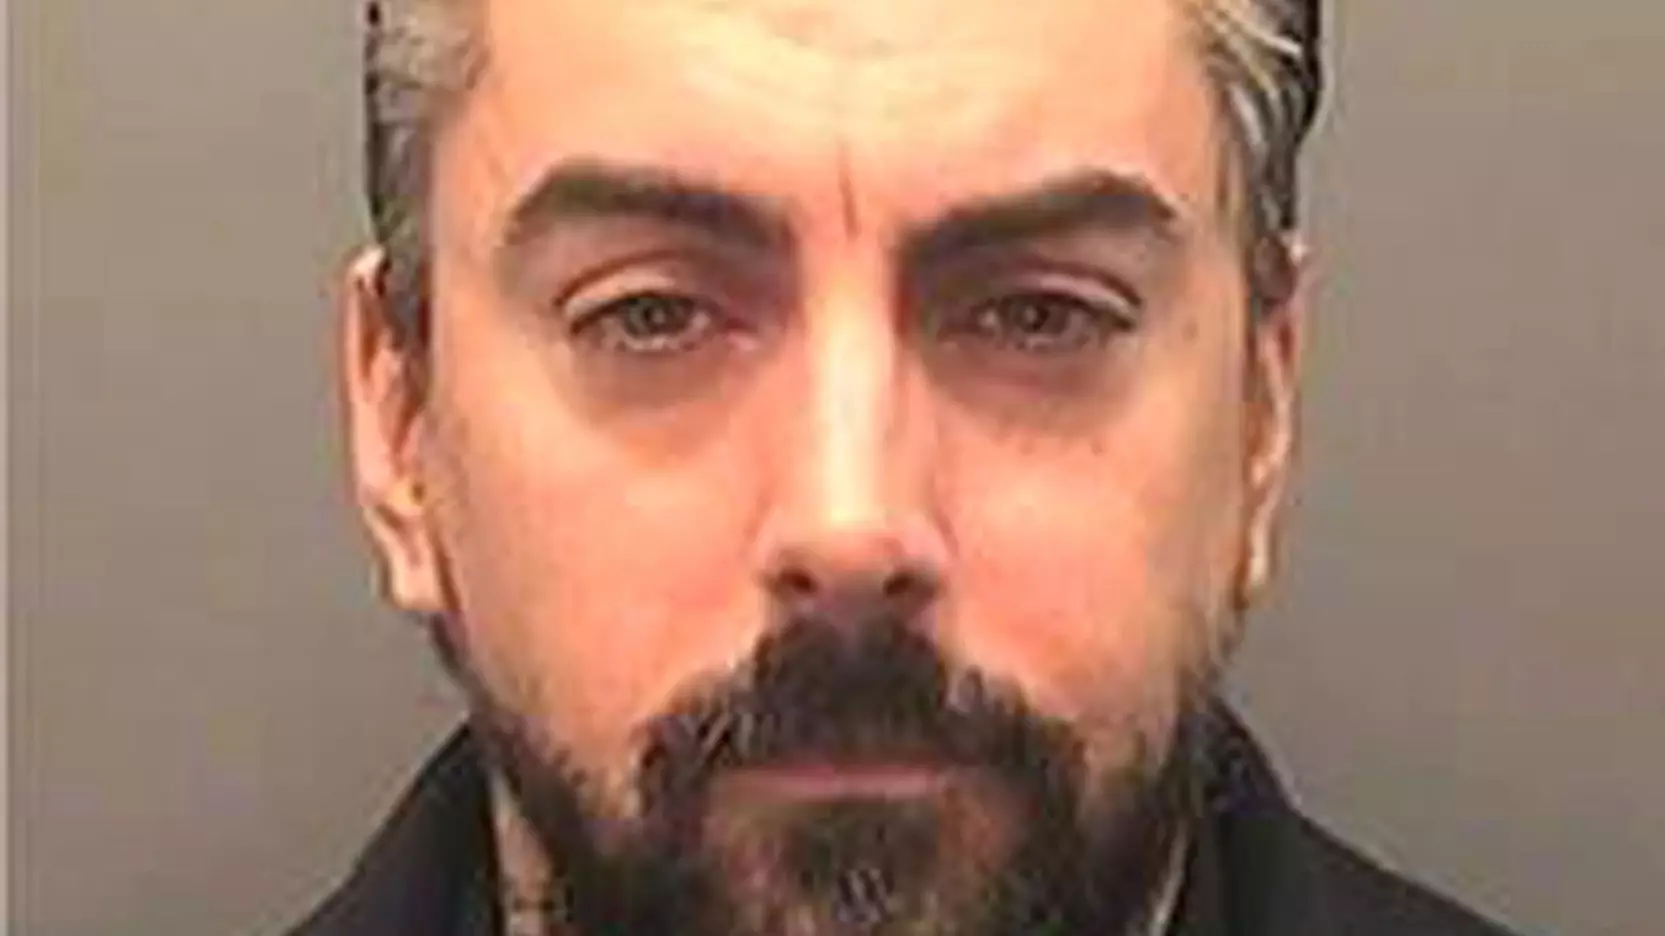 Lostprophets Singer Ian Watkins Found Guilty Of Shoving Phone Up His Bum In Prison